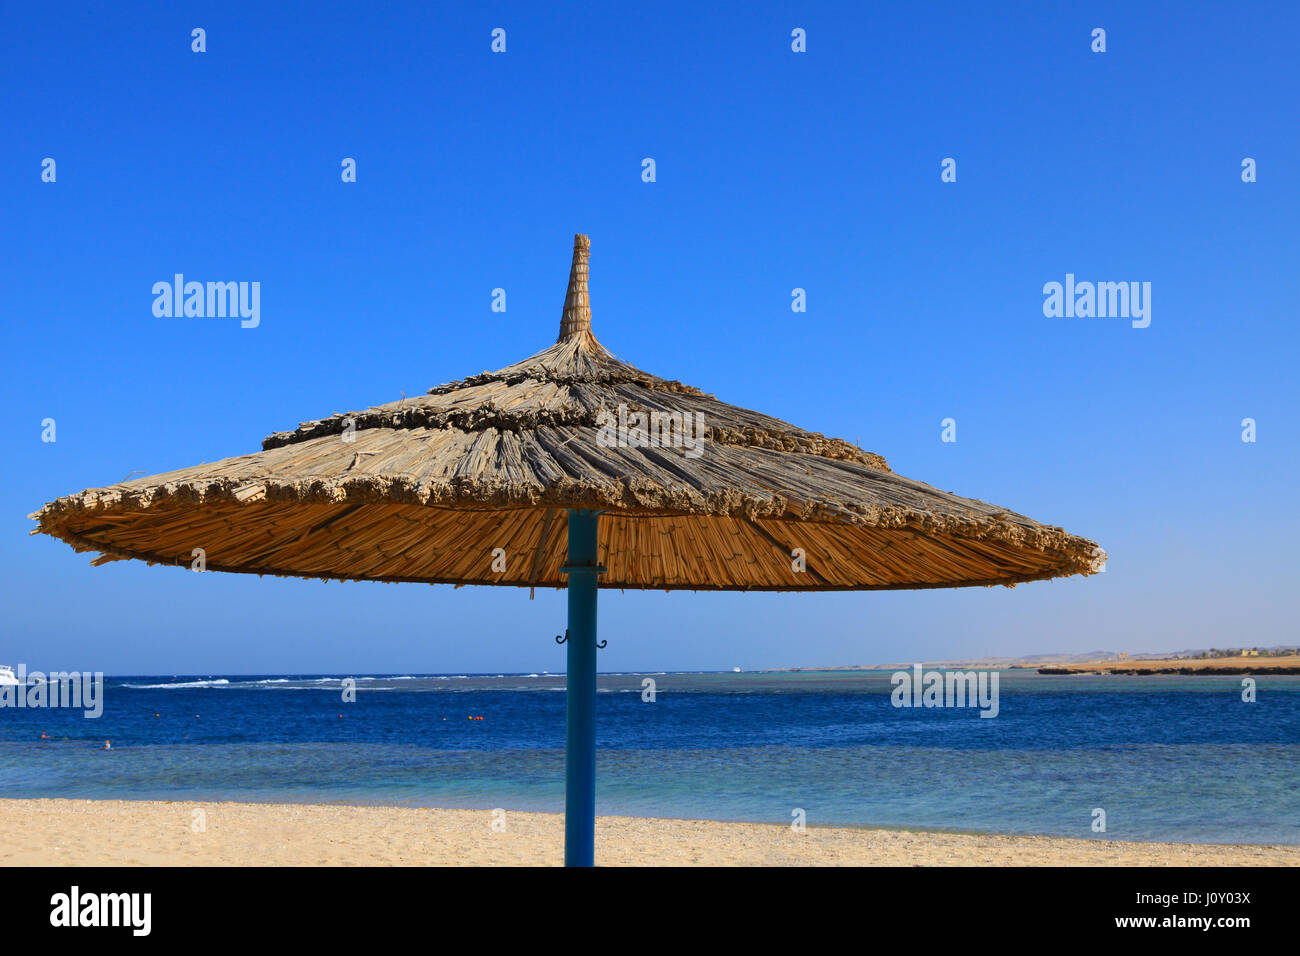 Egyptian parasol on the beach of Red Sea. Port Ghalib, Egypt. Stock Photo